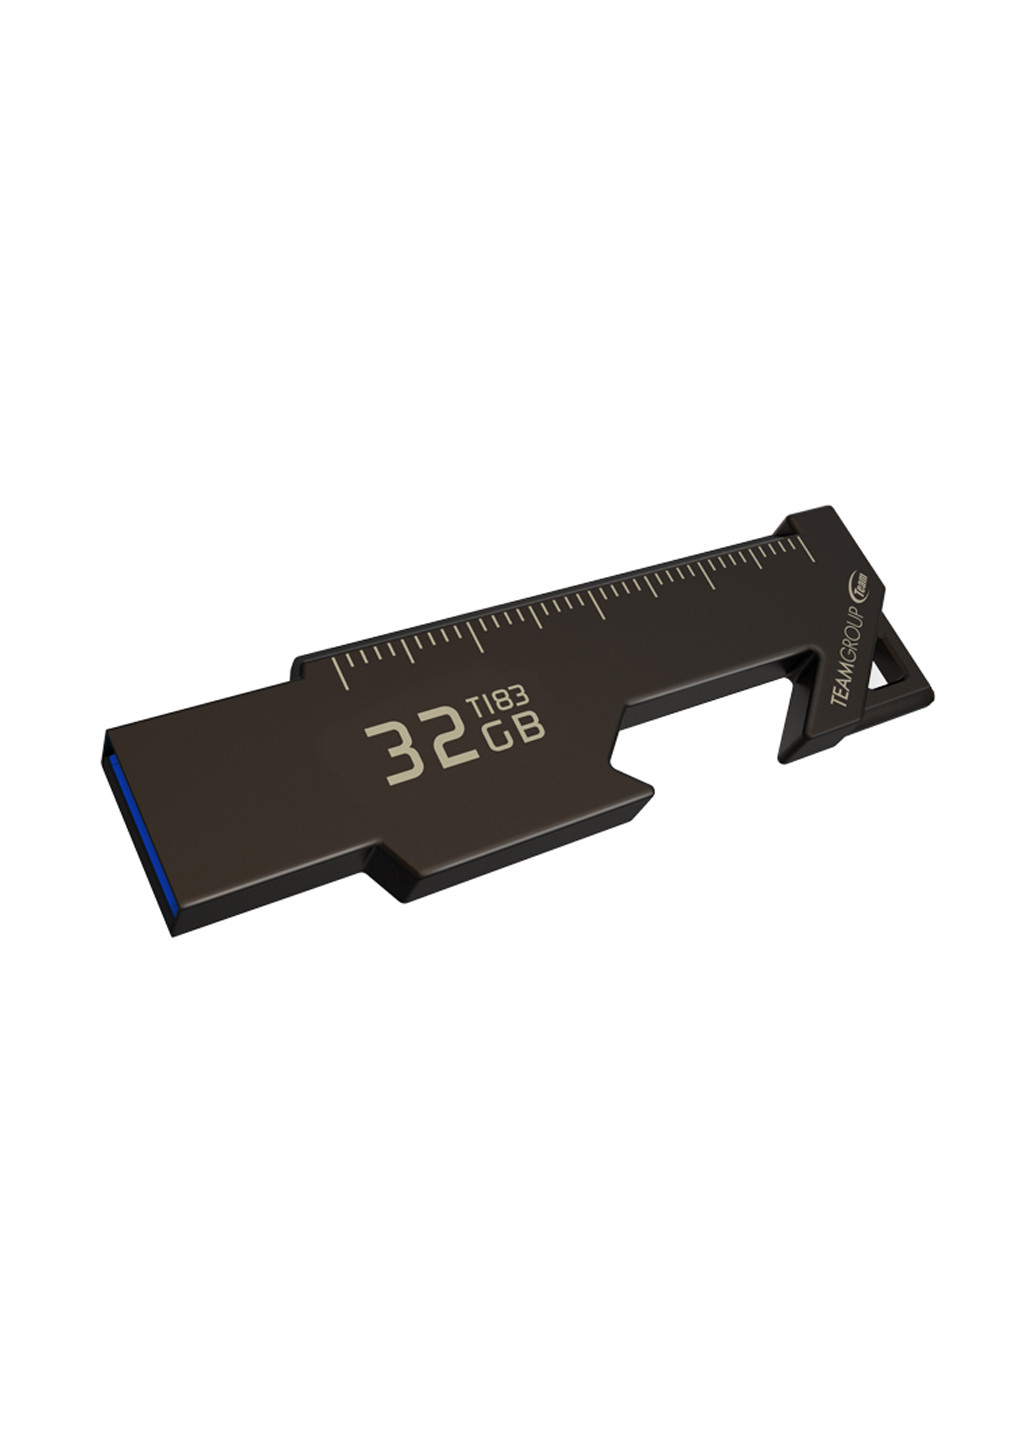 Флеш память USB T183 32GB Black (TT183332GF01) Team флеш память usb team t183 32gb black (tt183332gf01) (134201756)